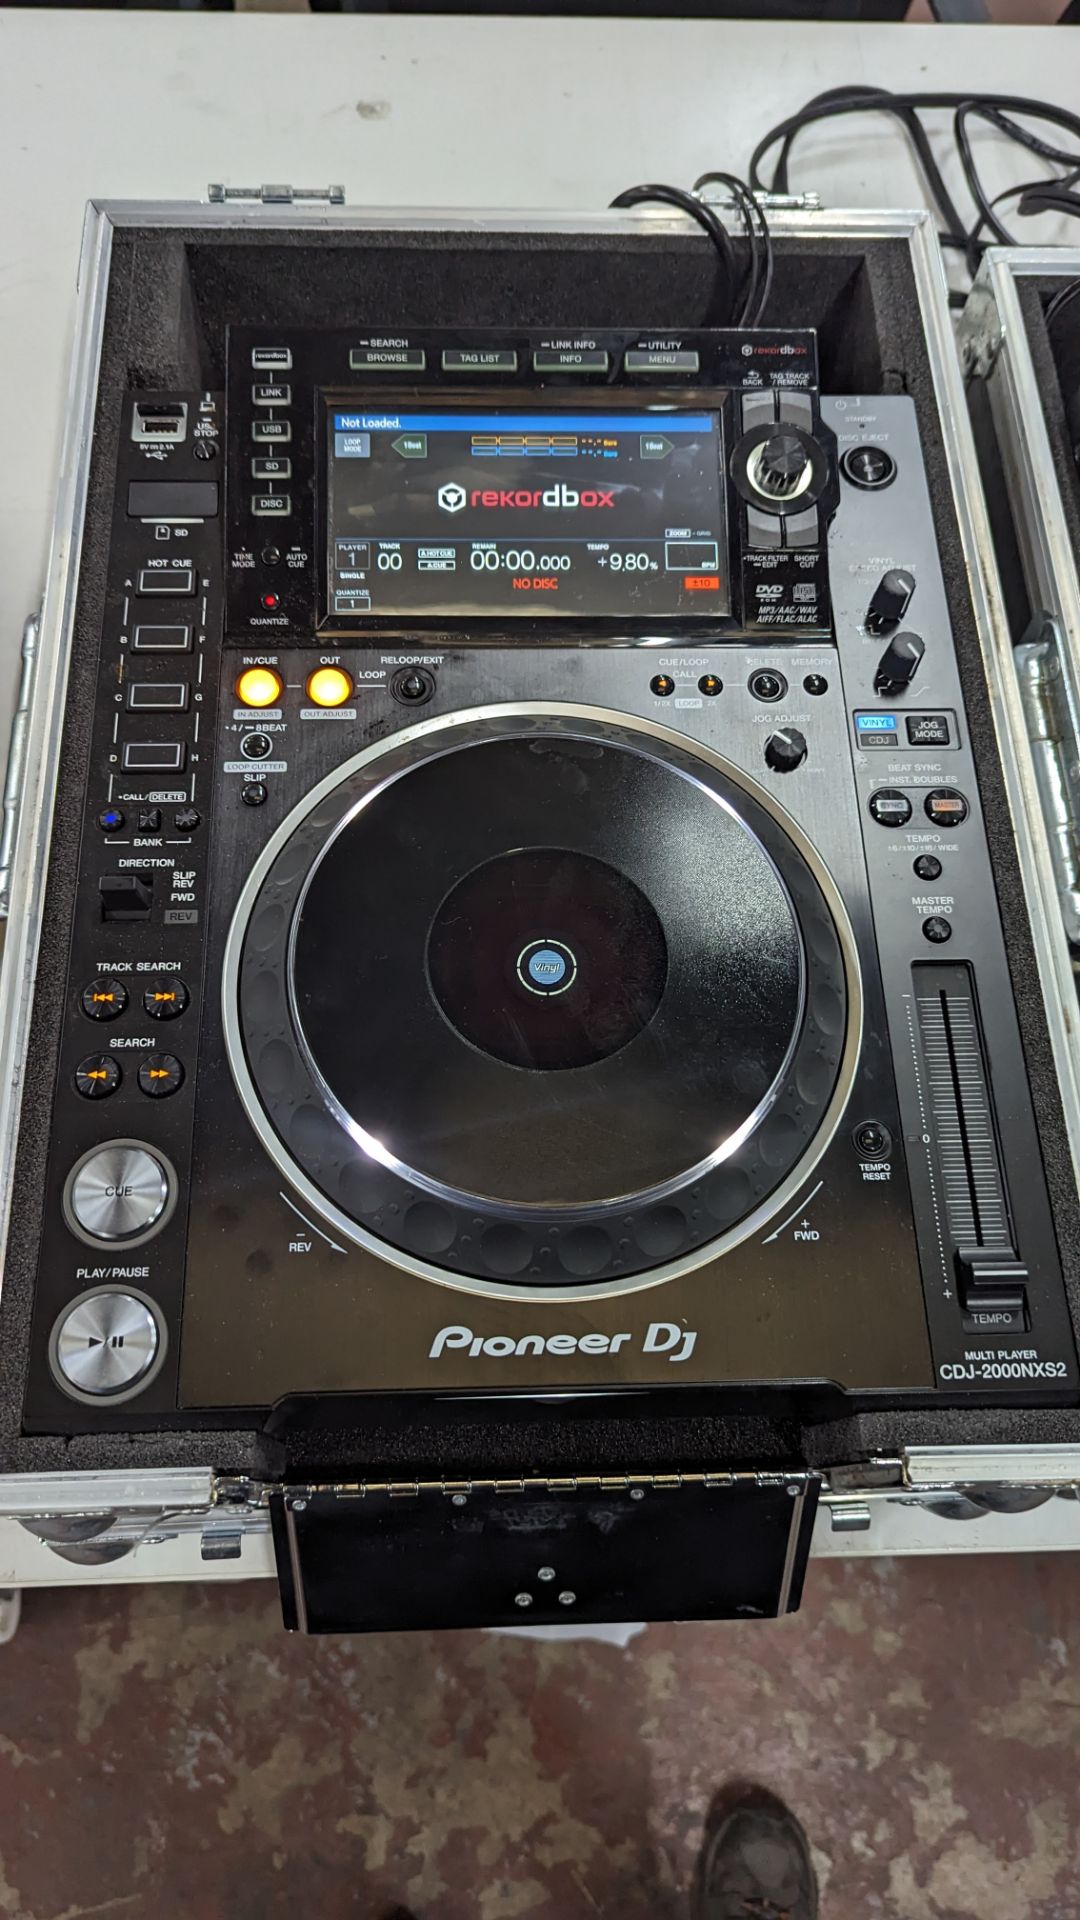 Pioneer Pro DJ package: DJM-900NXS2 Mixer & 2x DJM-900NXS2 multi players - Image 7 of 55